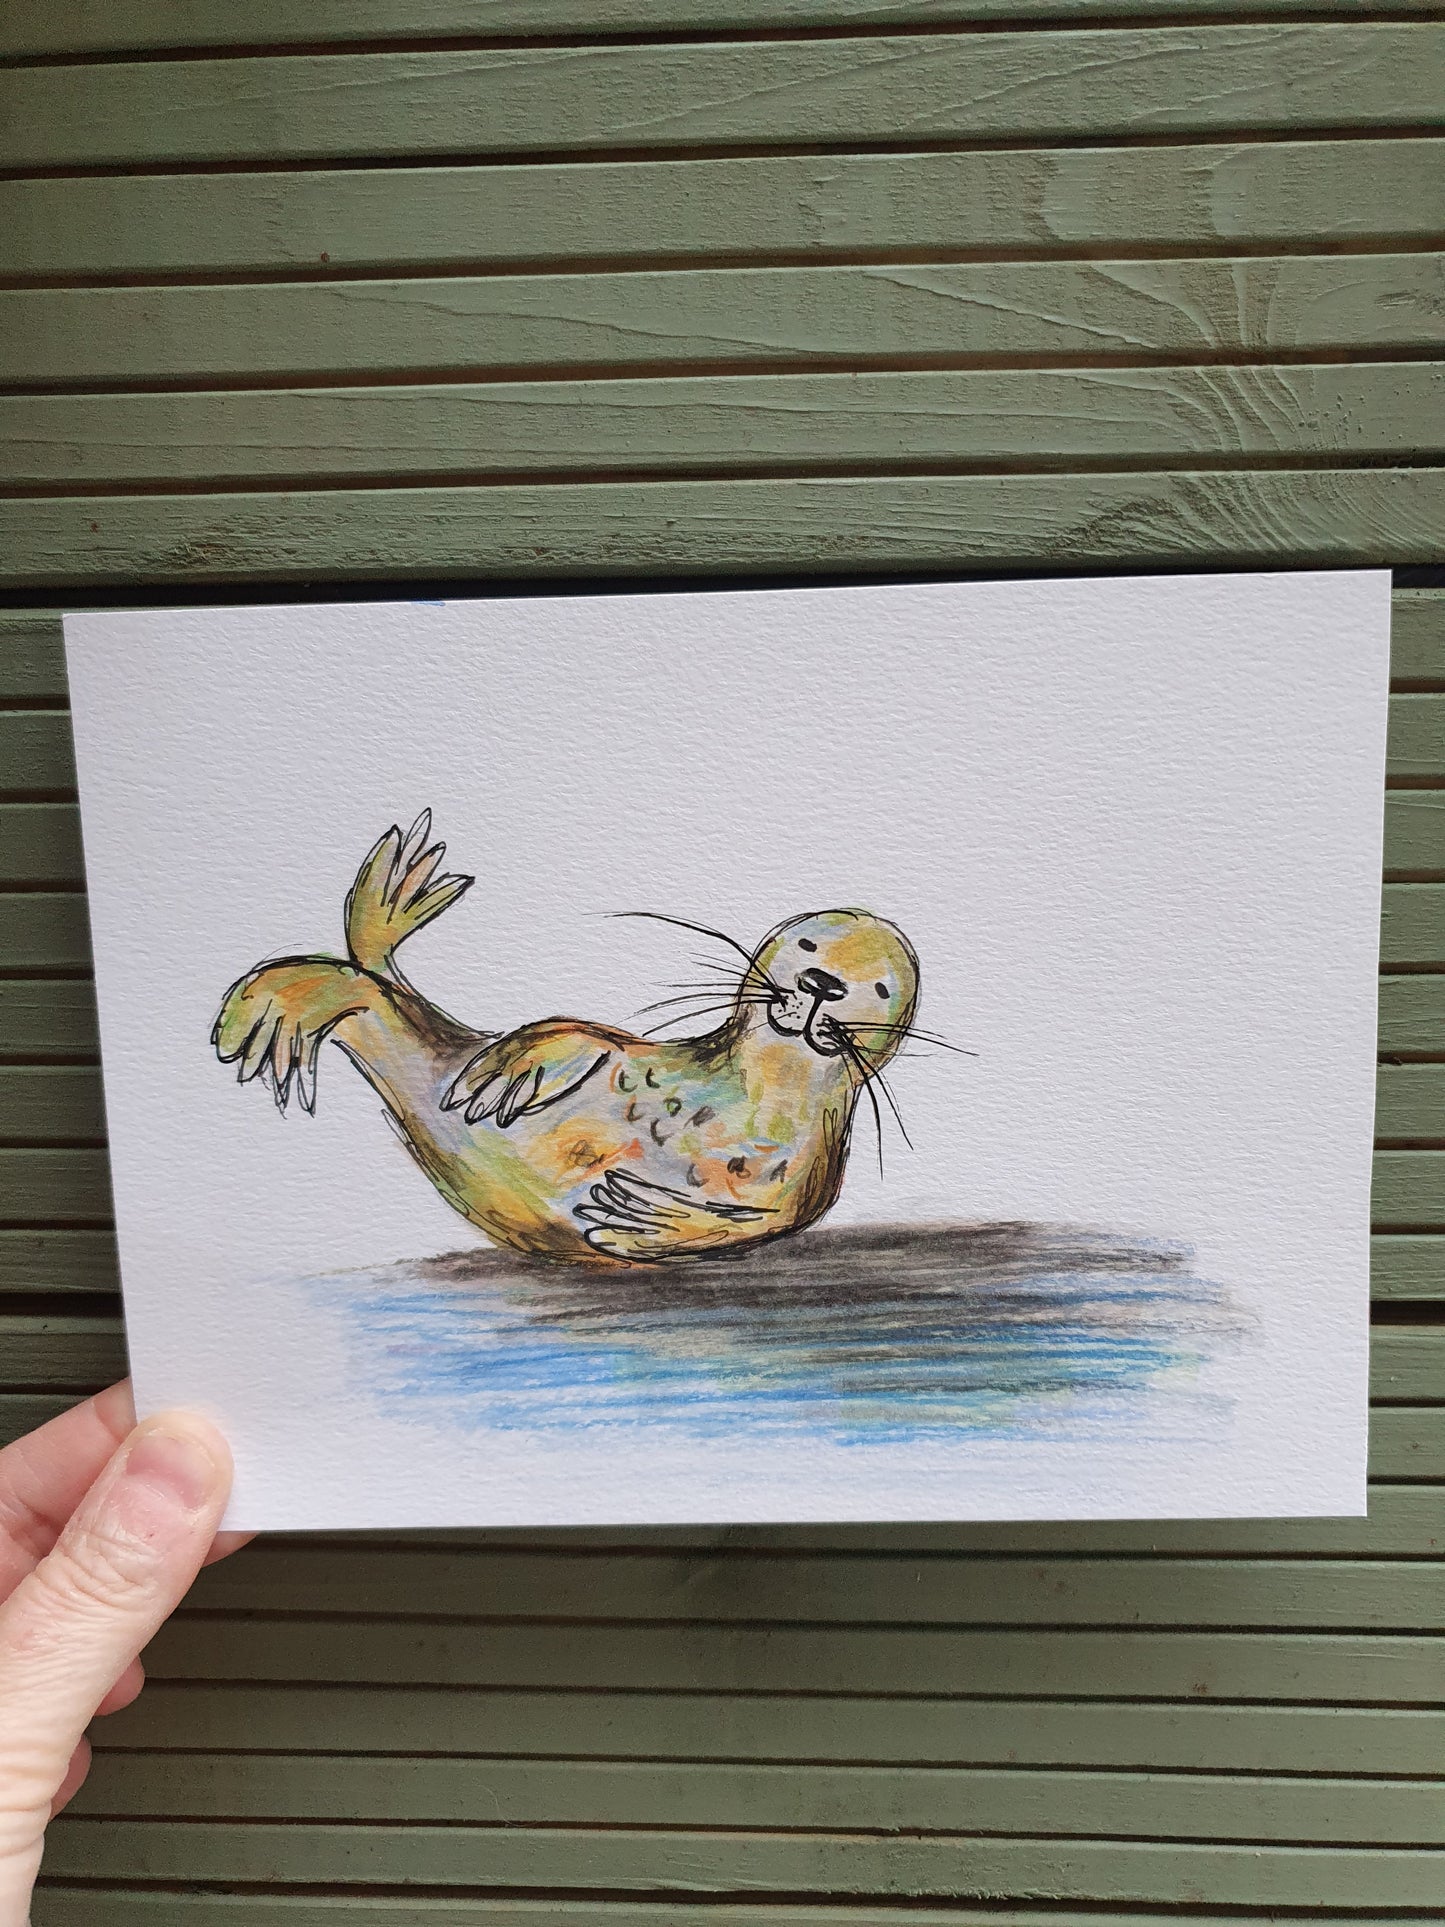 Seal illustration 'Jim'